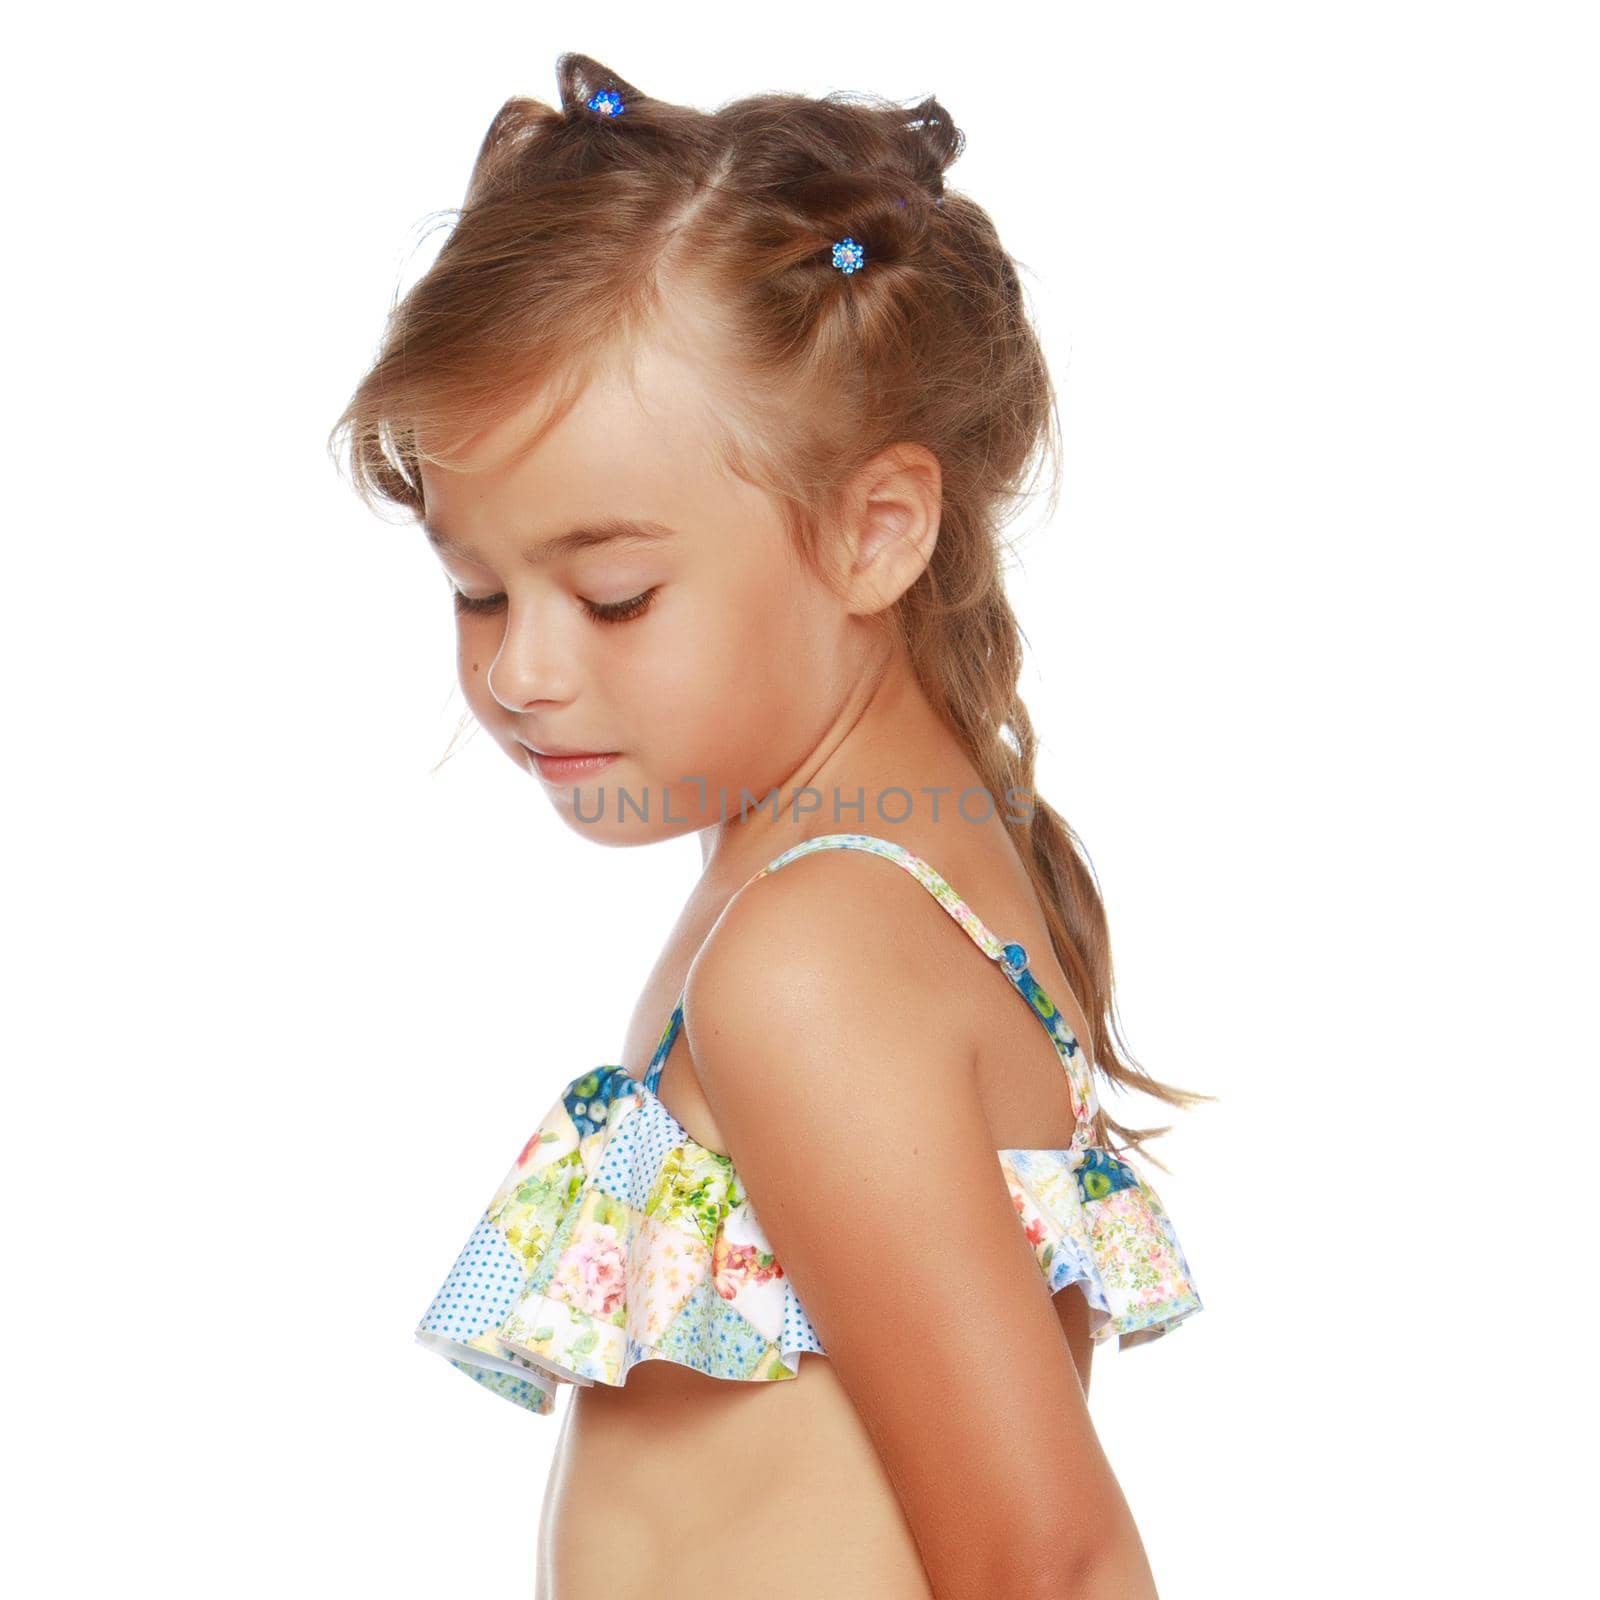 Tanned little girl in a swimsuit by kolesnikov_studio